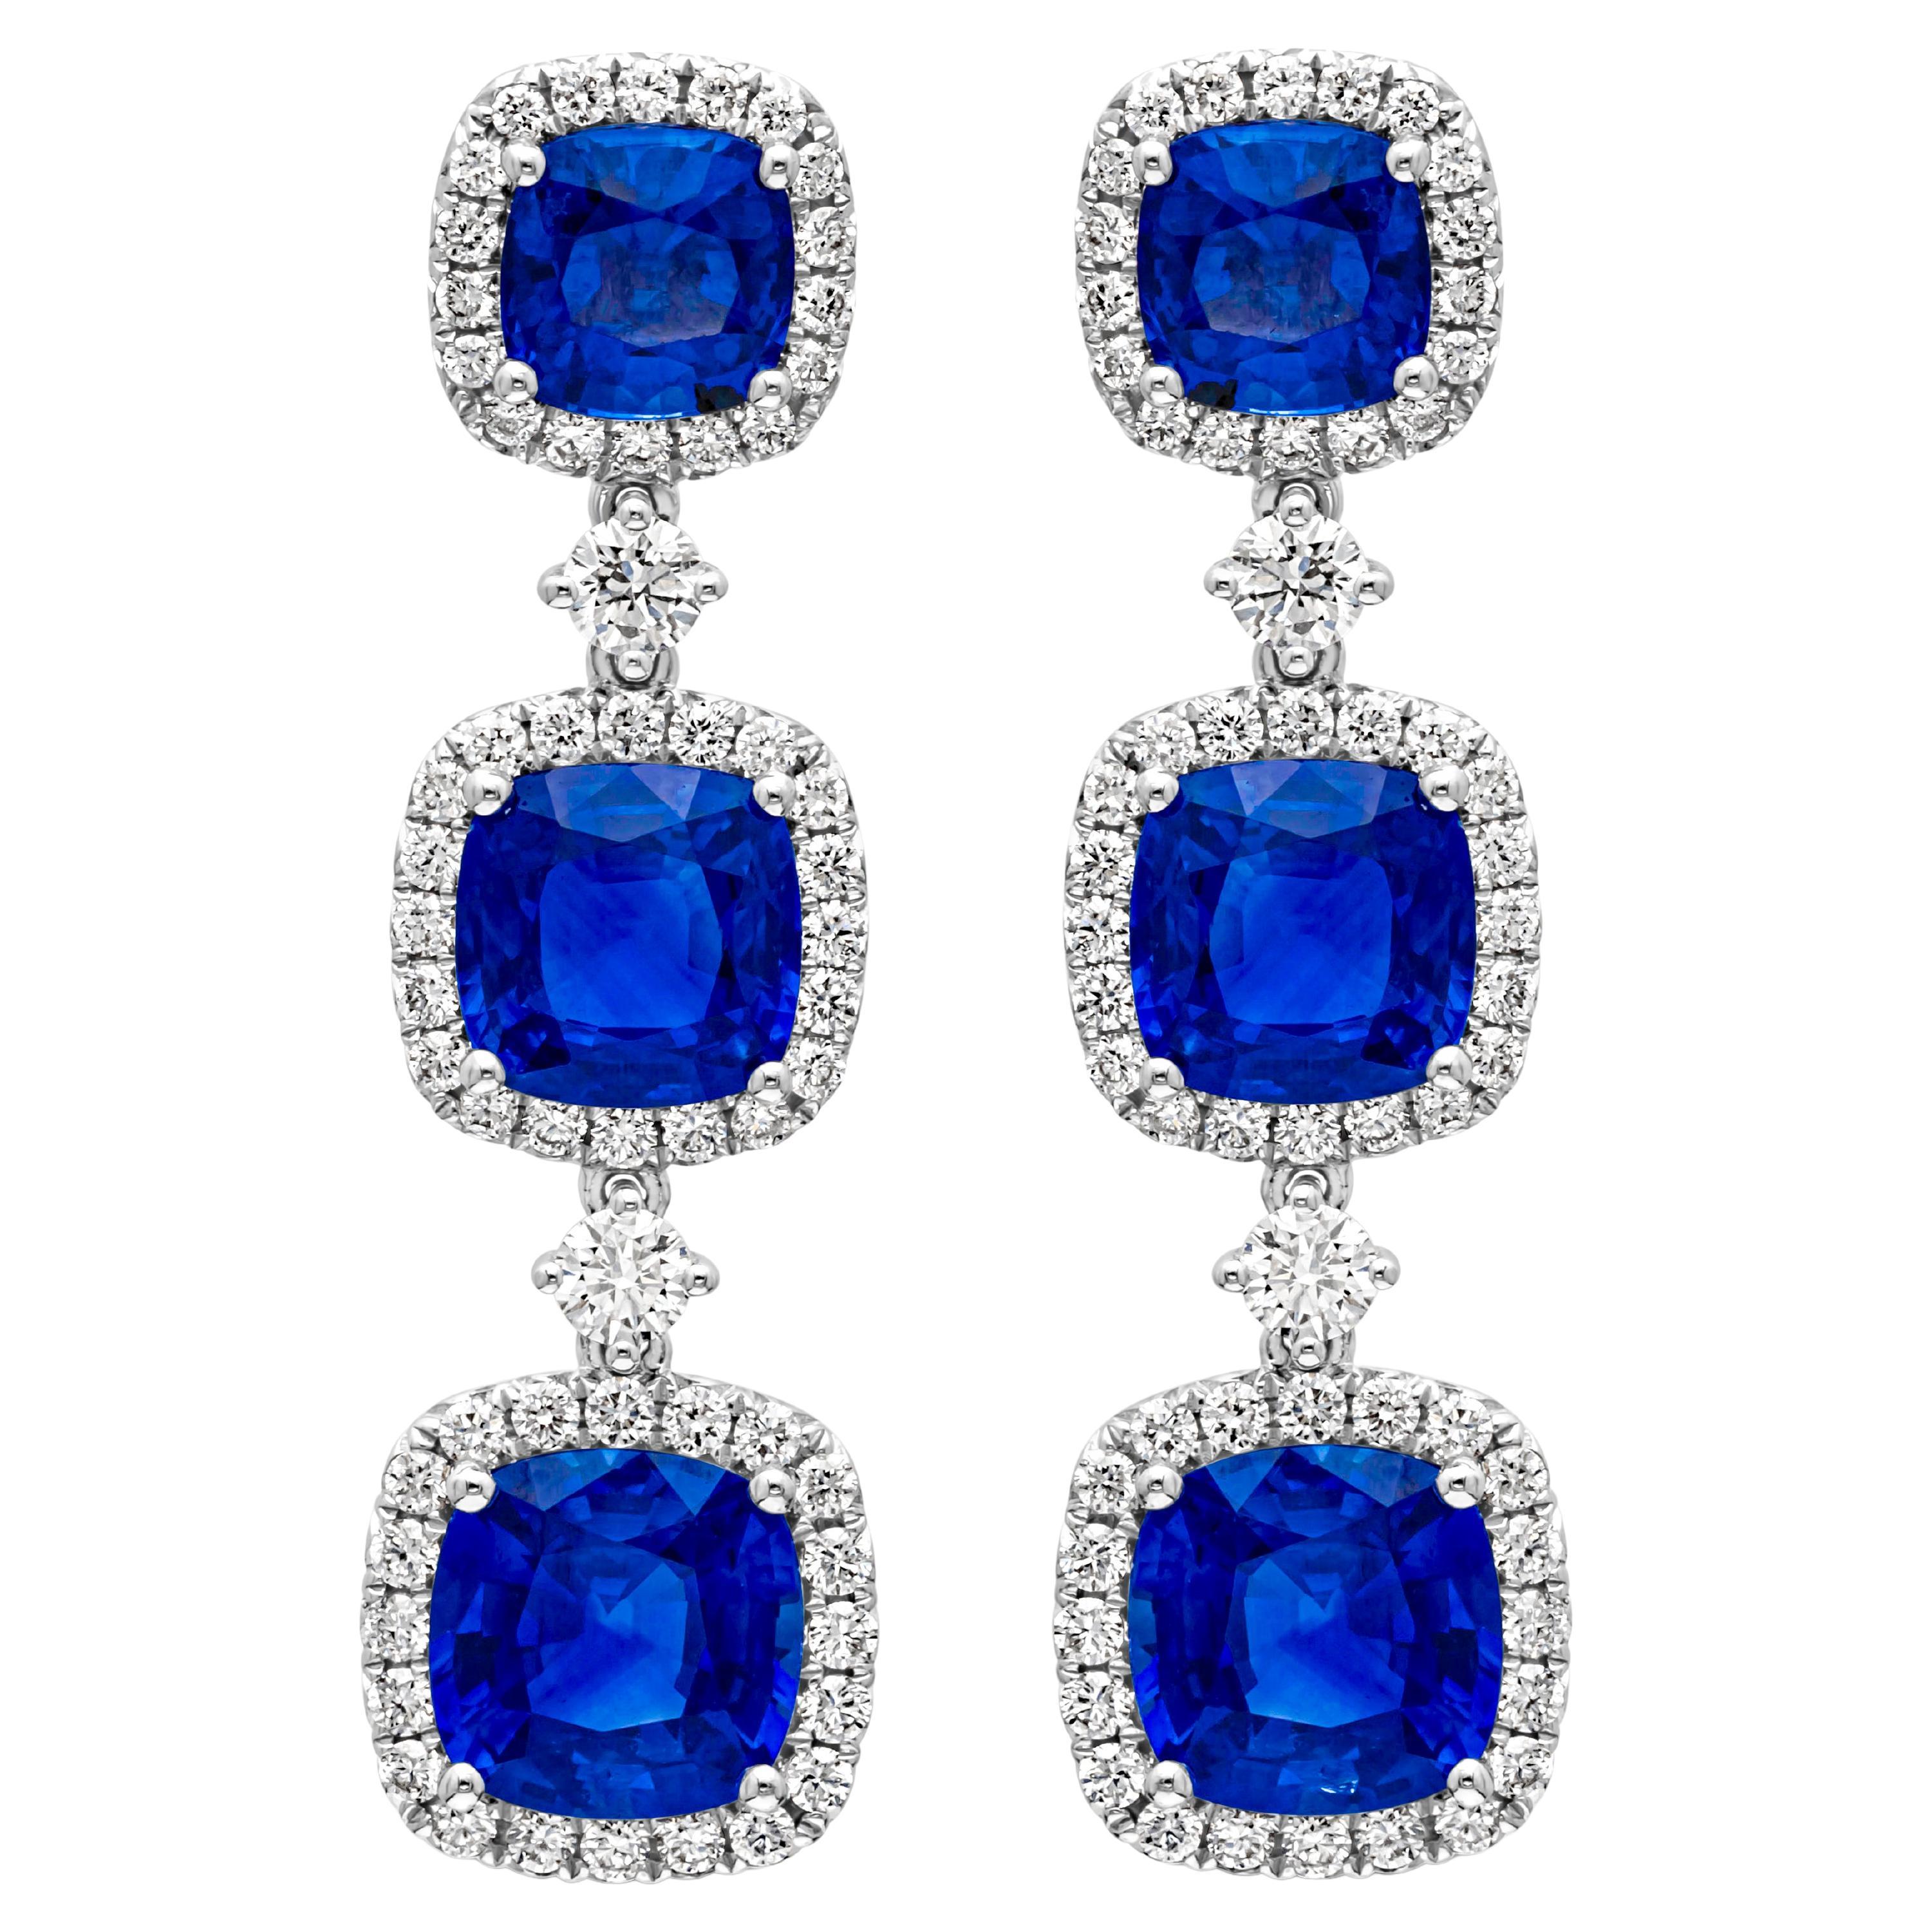 Roman Malakov 6.72 Carat Total Cushion Cut Sapphire with Diamond Drop Earrings